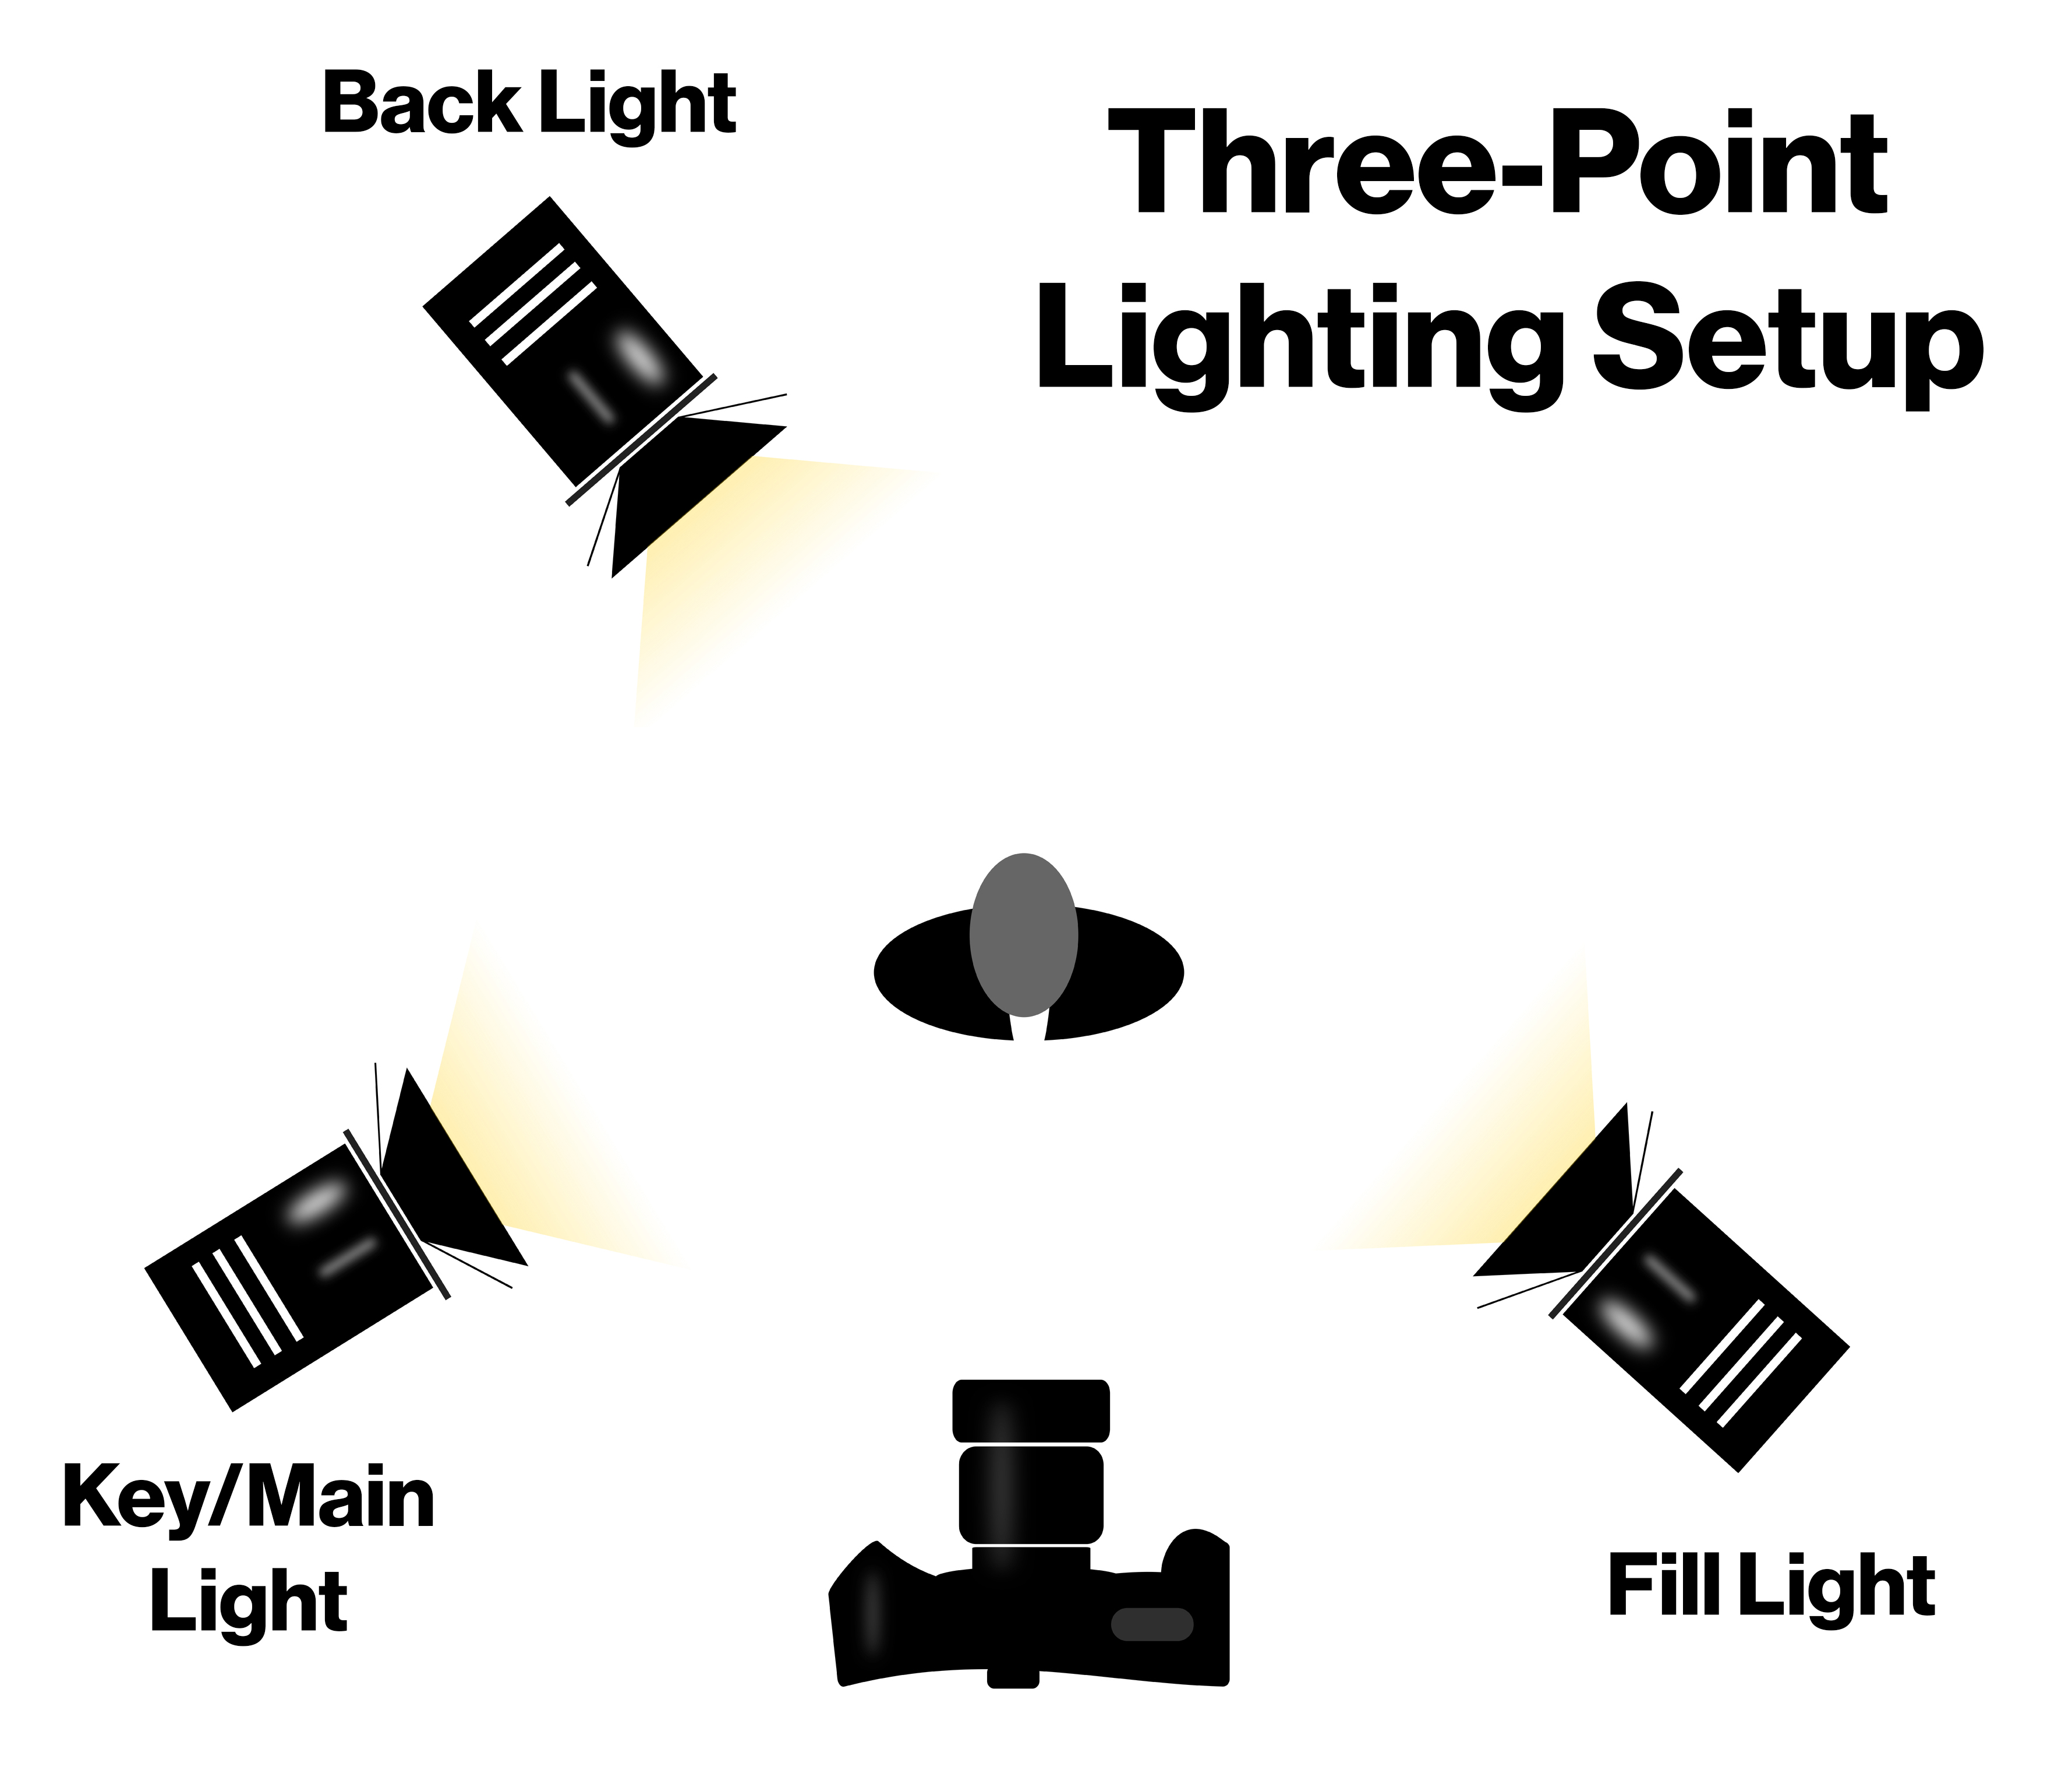 Three-point lighting setup